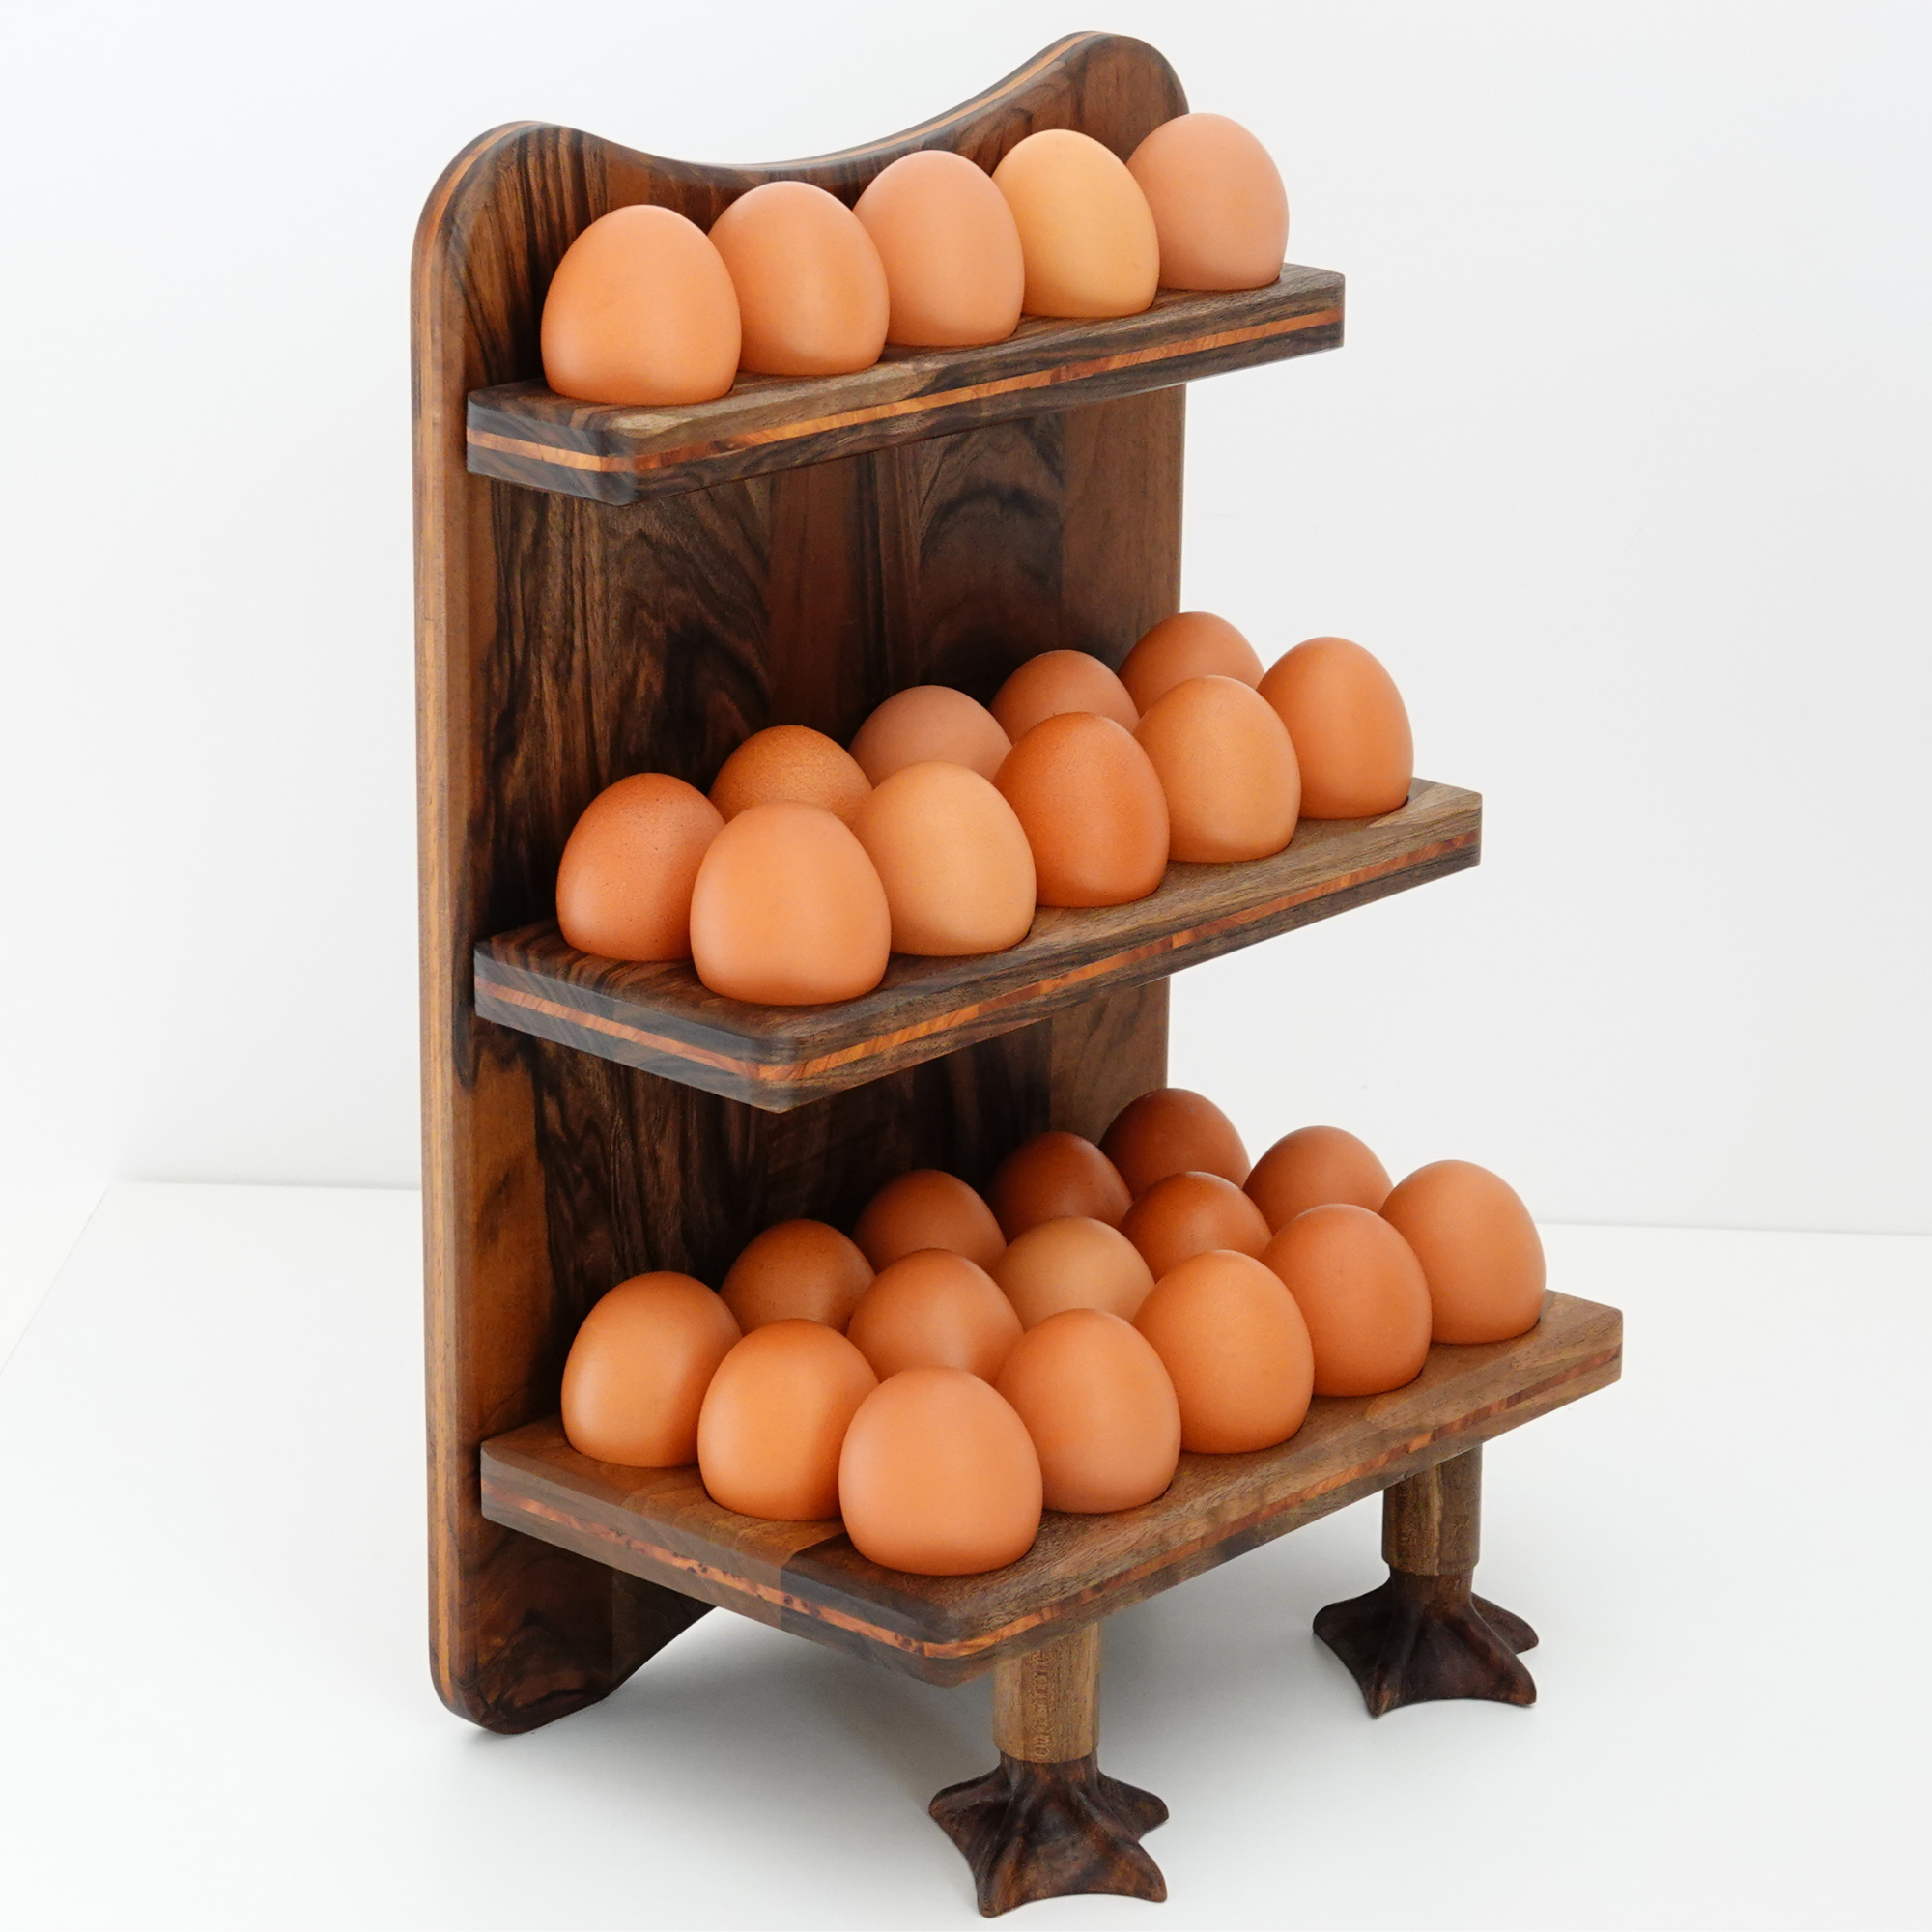 Royal Signet Wooden Egg Holder Wooden Egg Tray 18 Holder by Royal Signet, Handmade Solid Wood Egg Tray Holder for Refrigerator, or Egg Holder